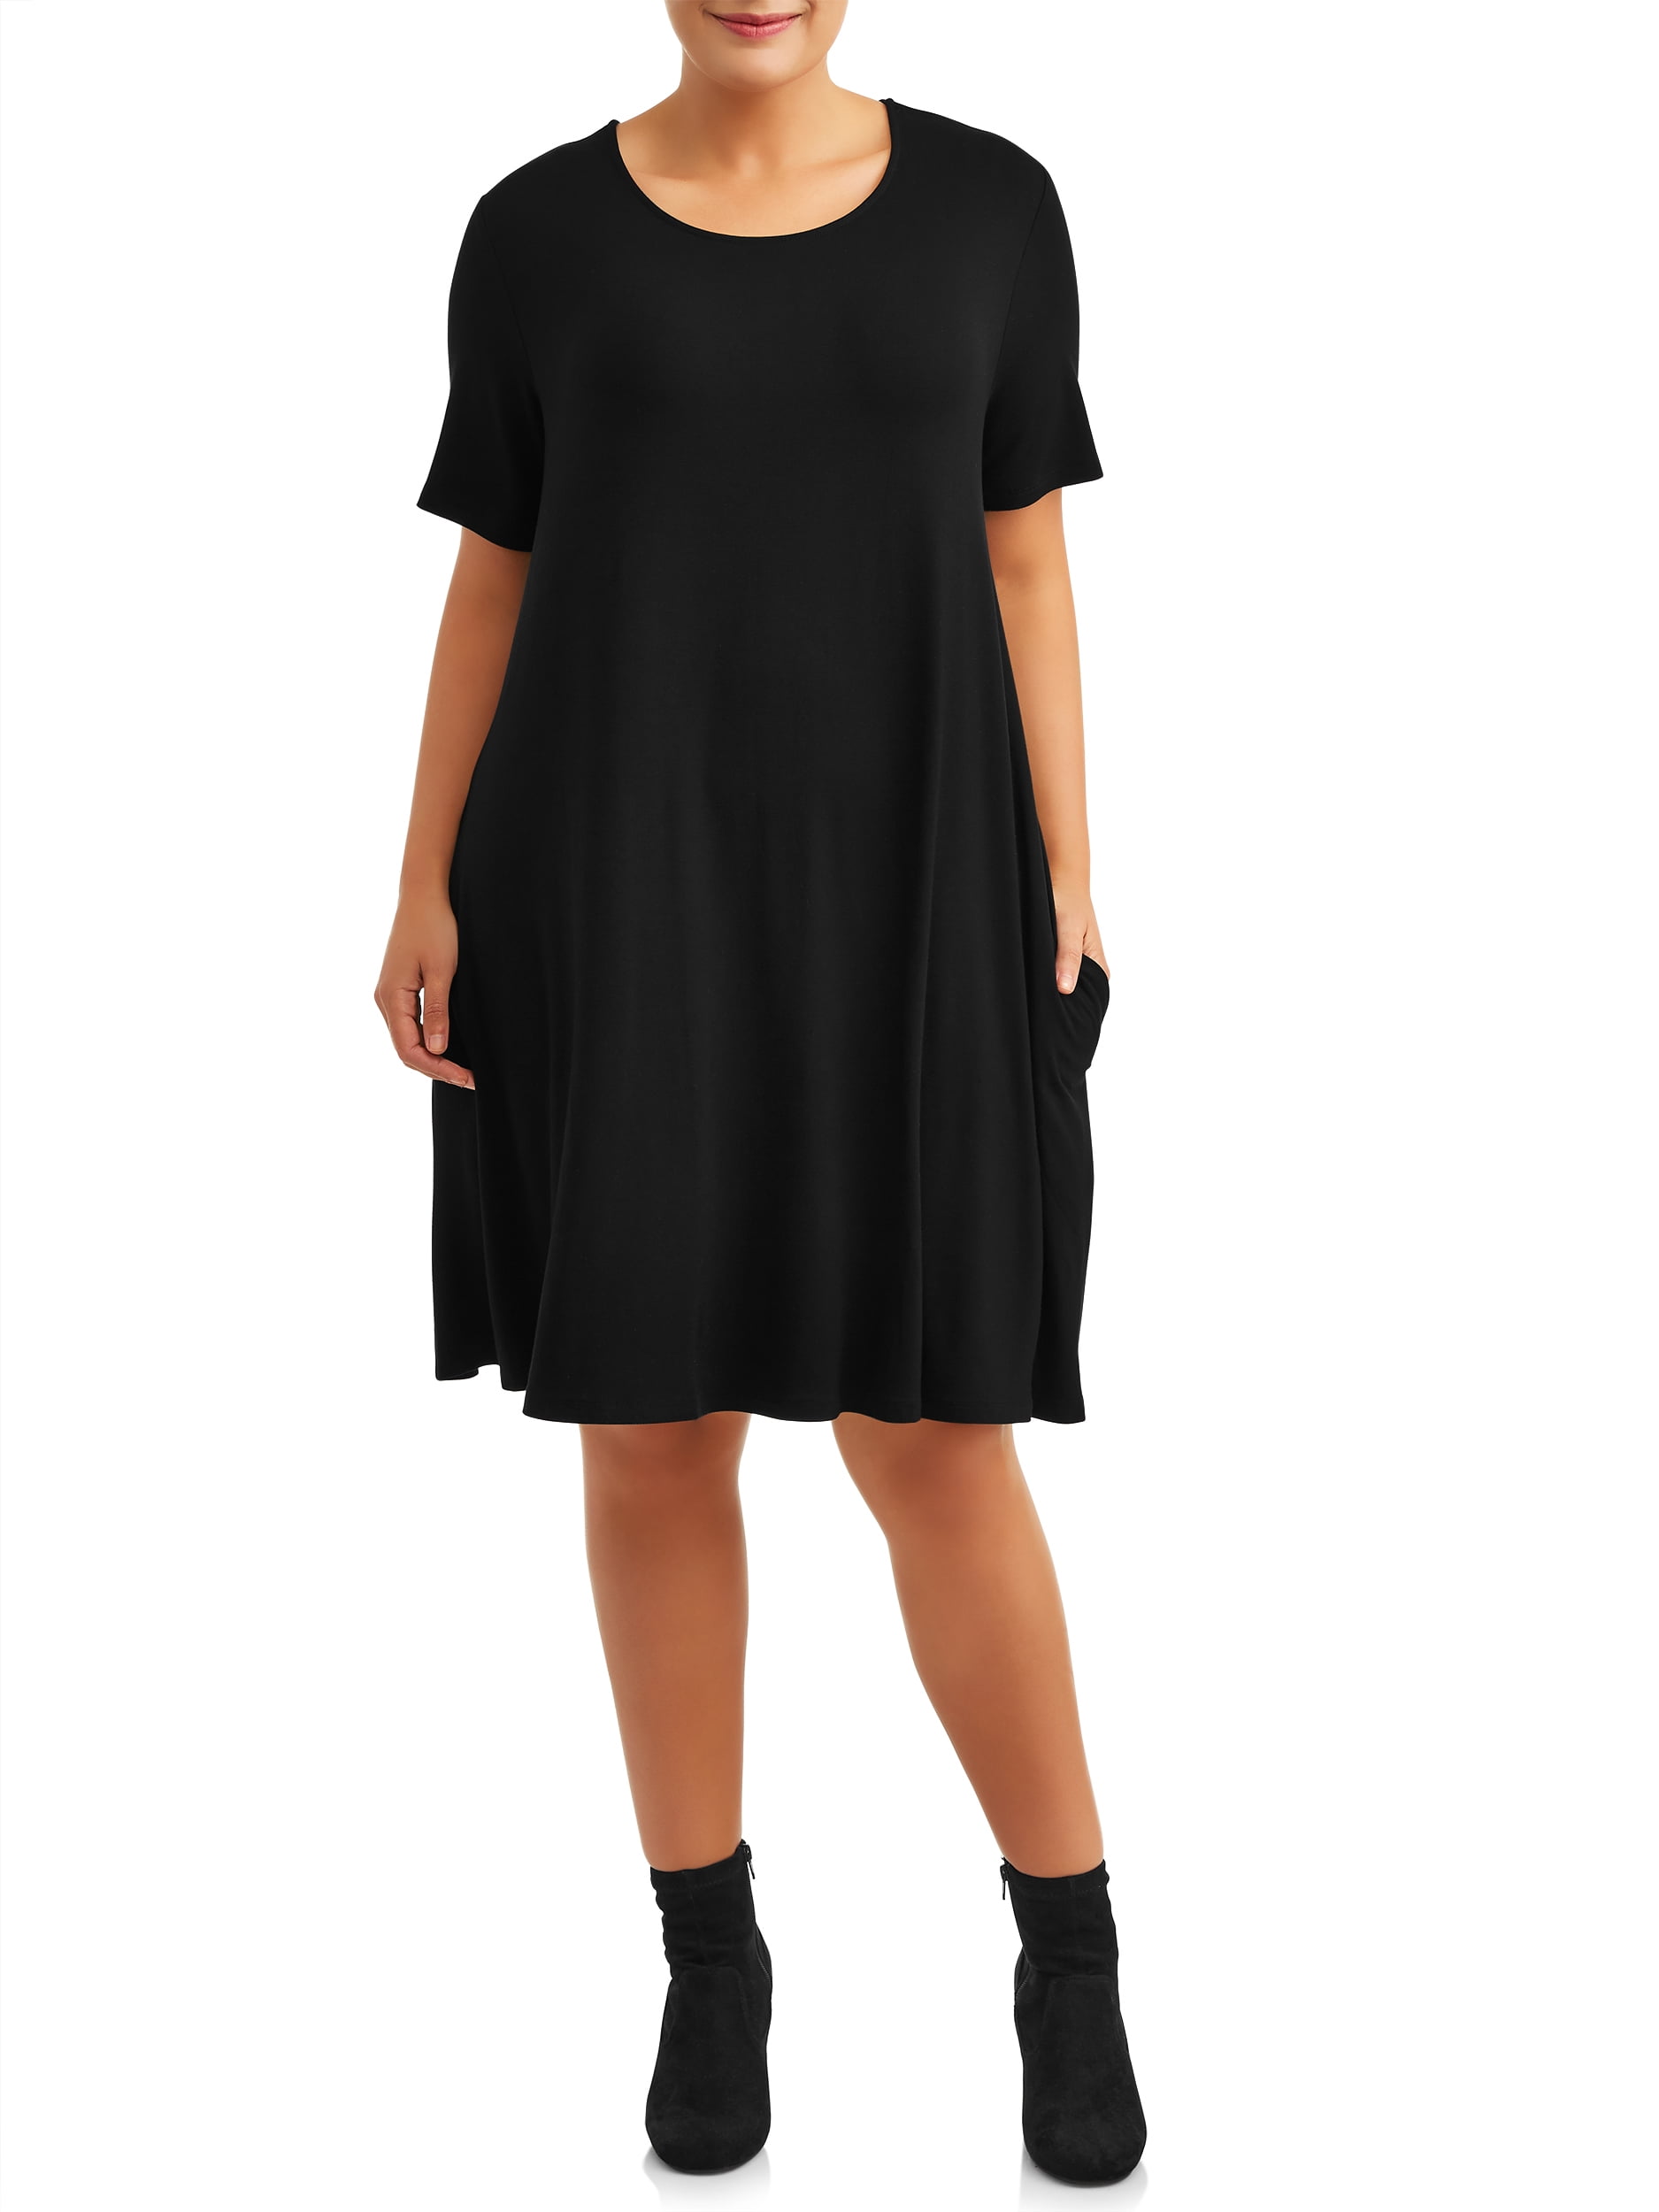 Terra & Sky Plus Size Short Sleeve Knit Dress with Pockets 